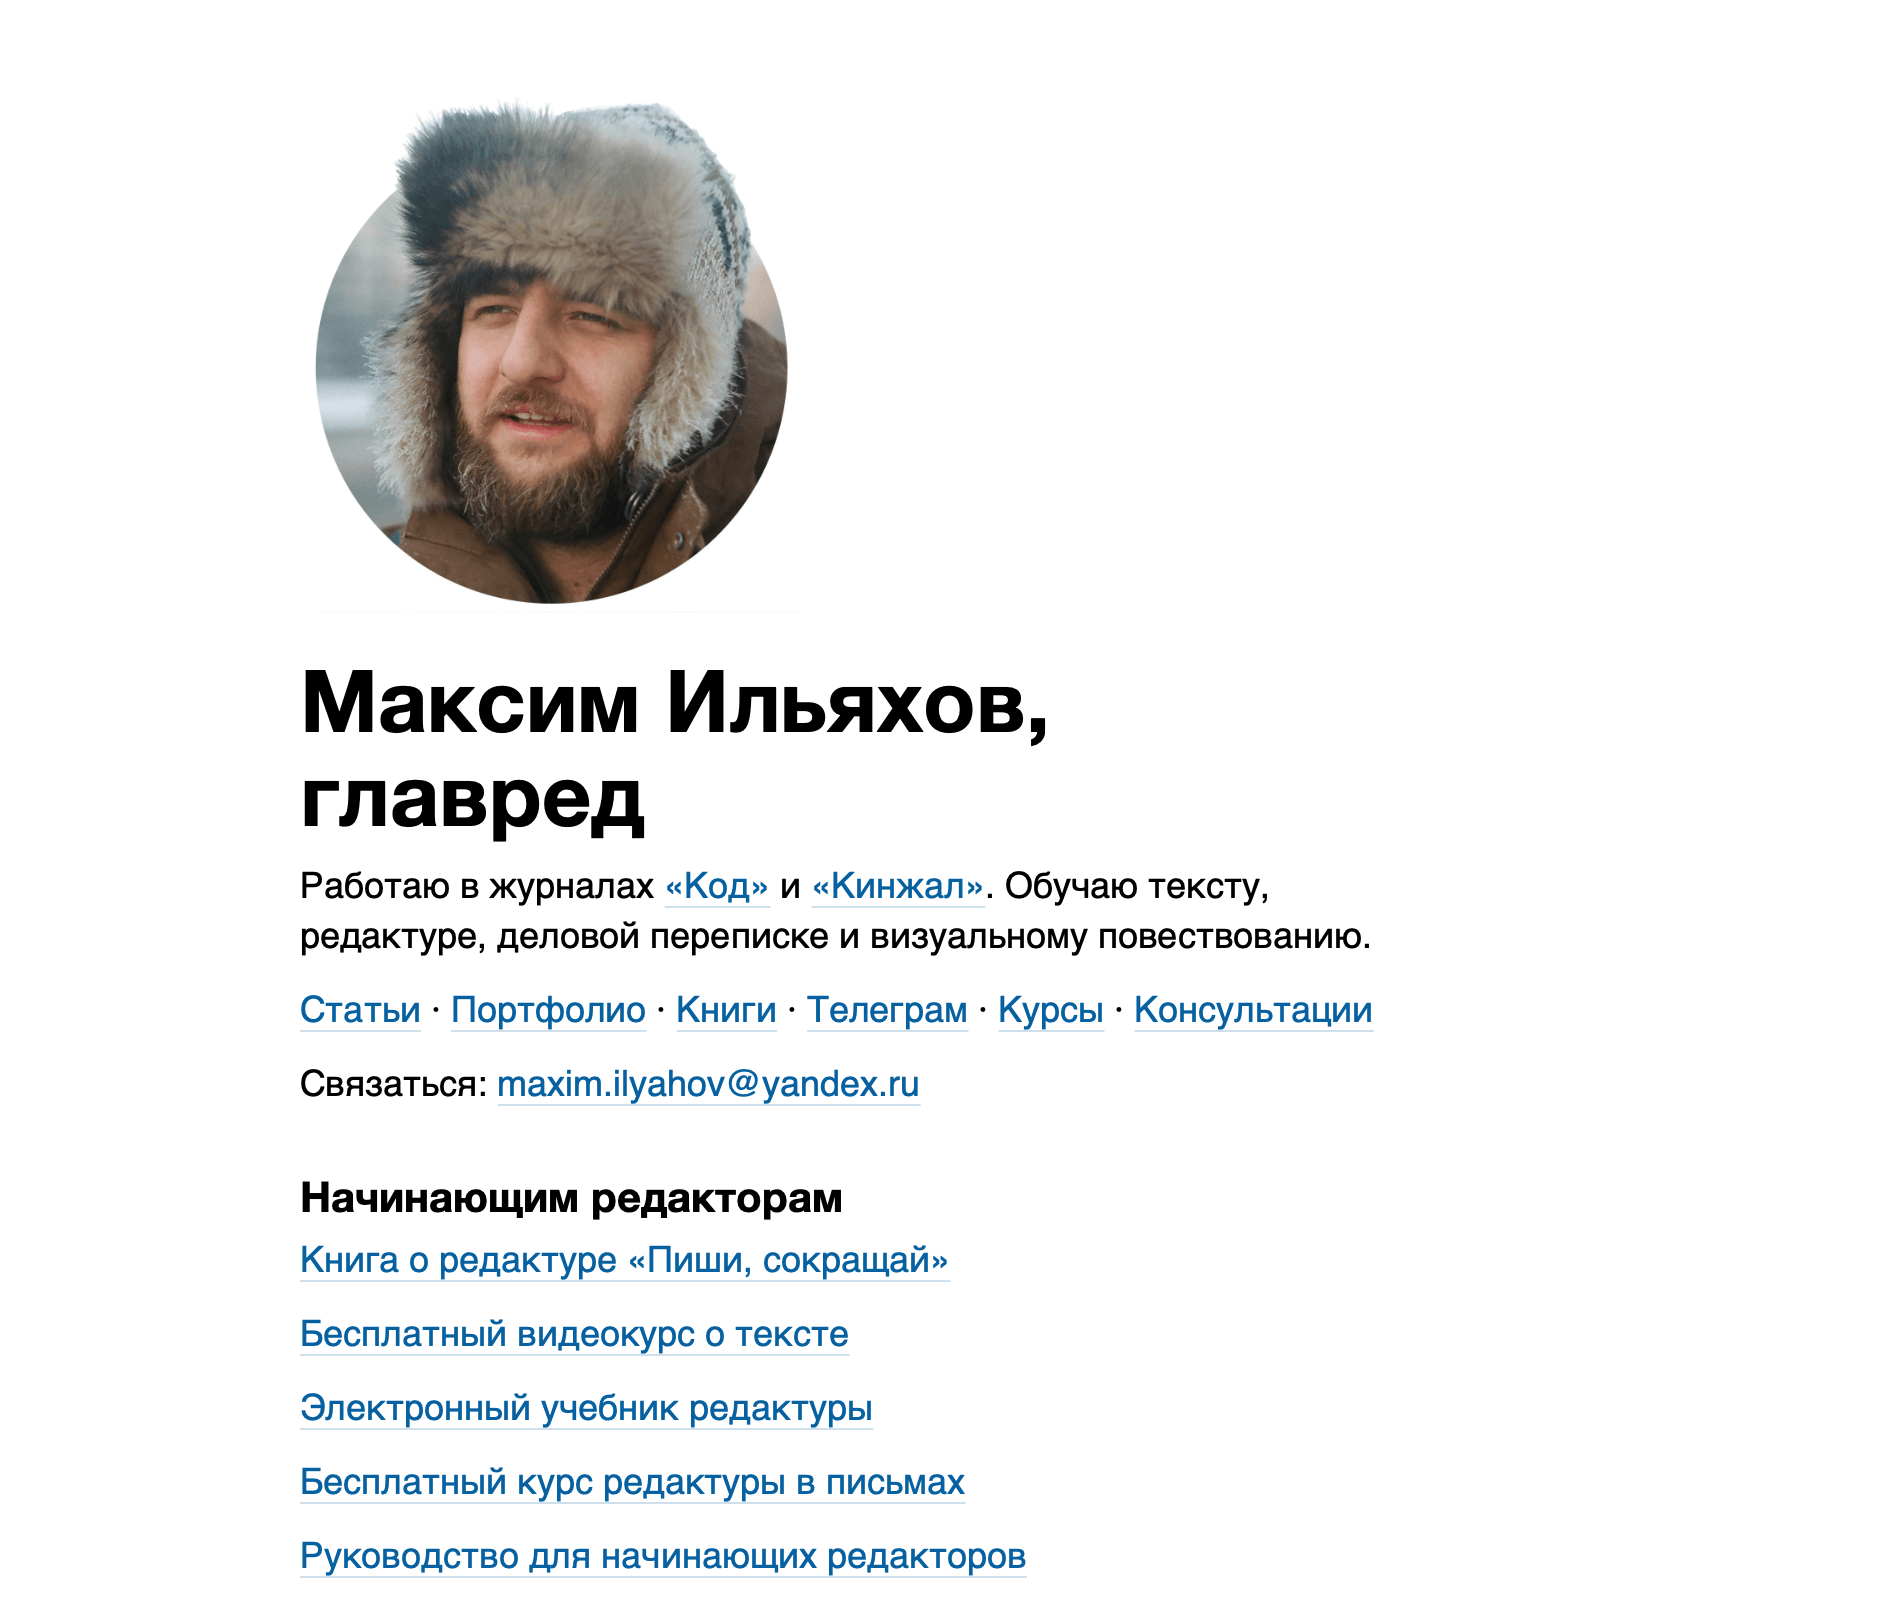 сайт Максима Ильяхова